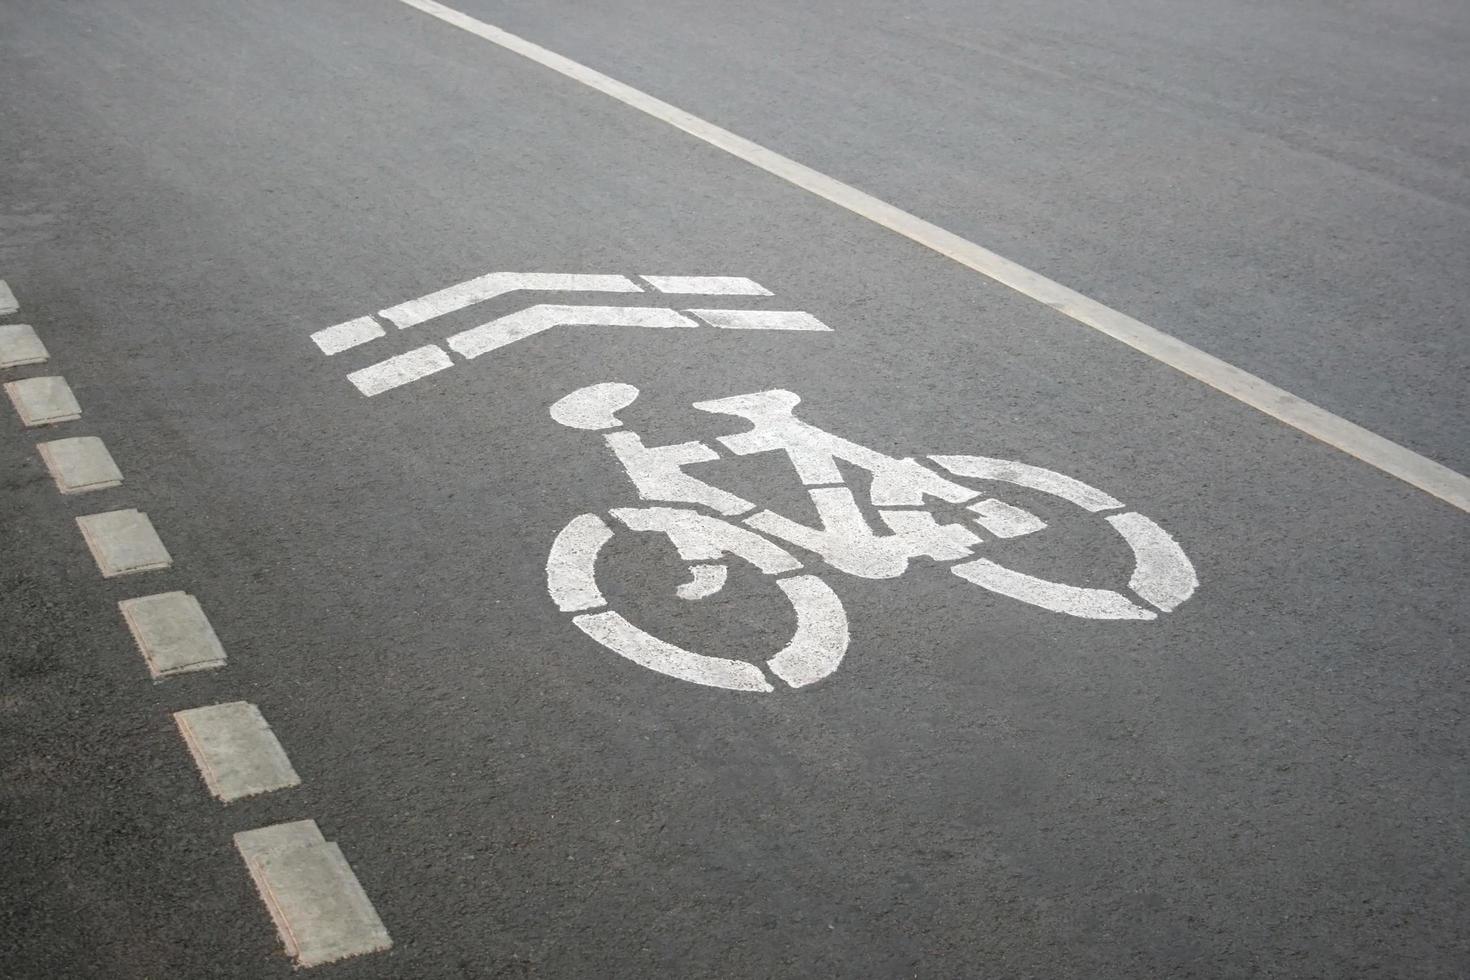 Bike lane symbol photo